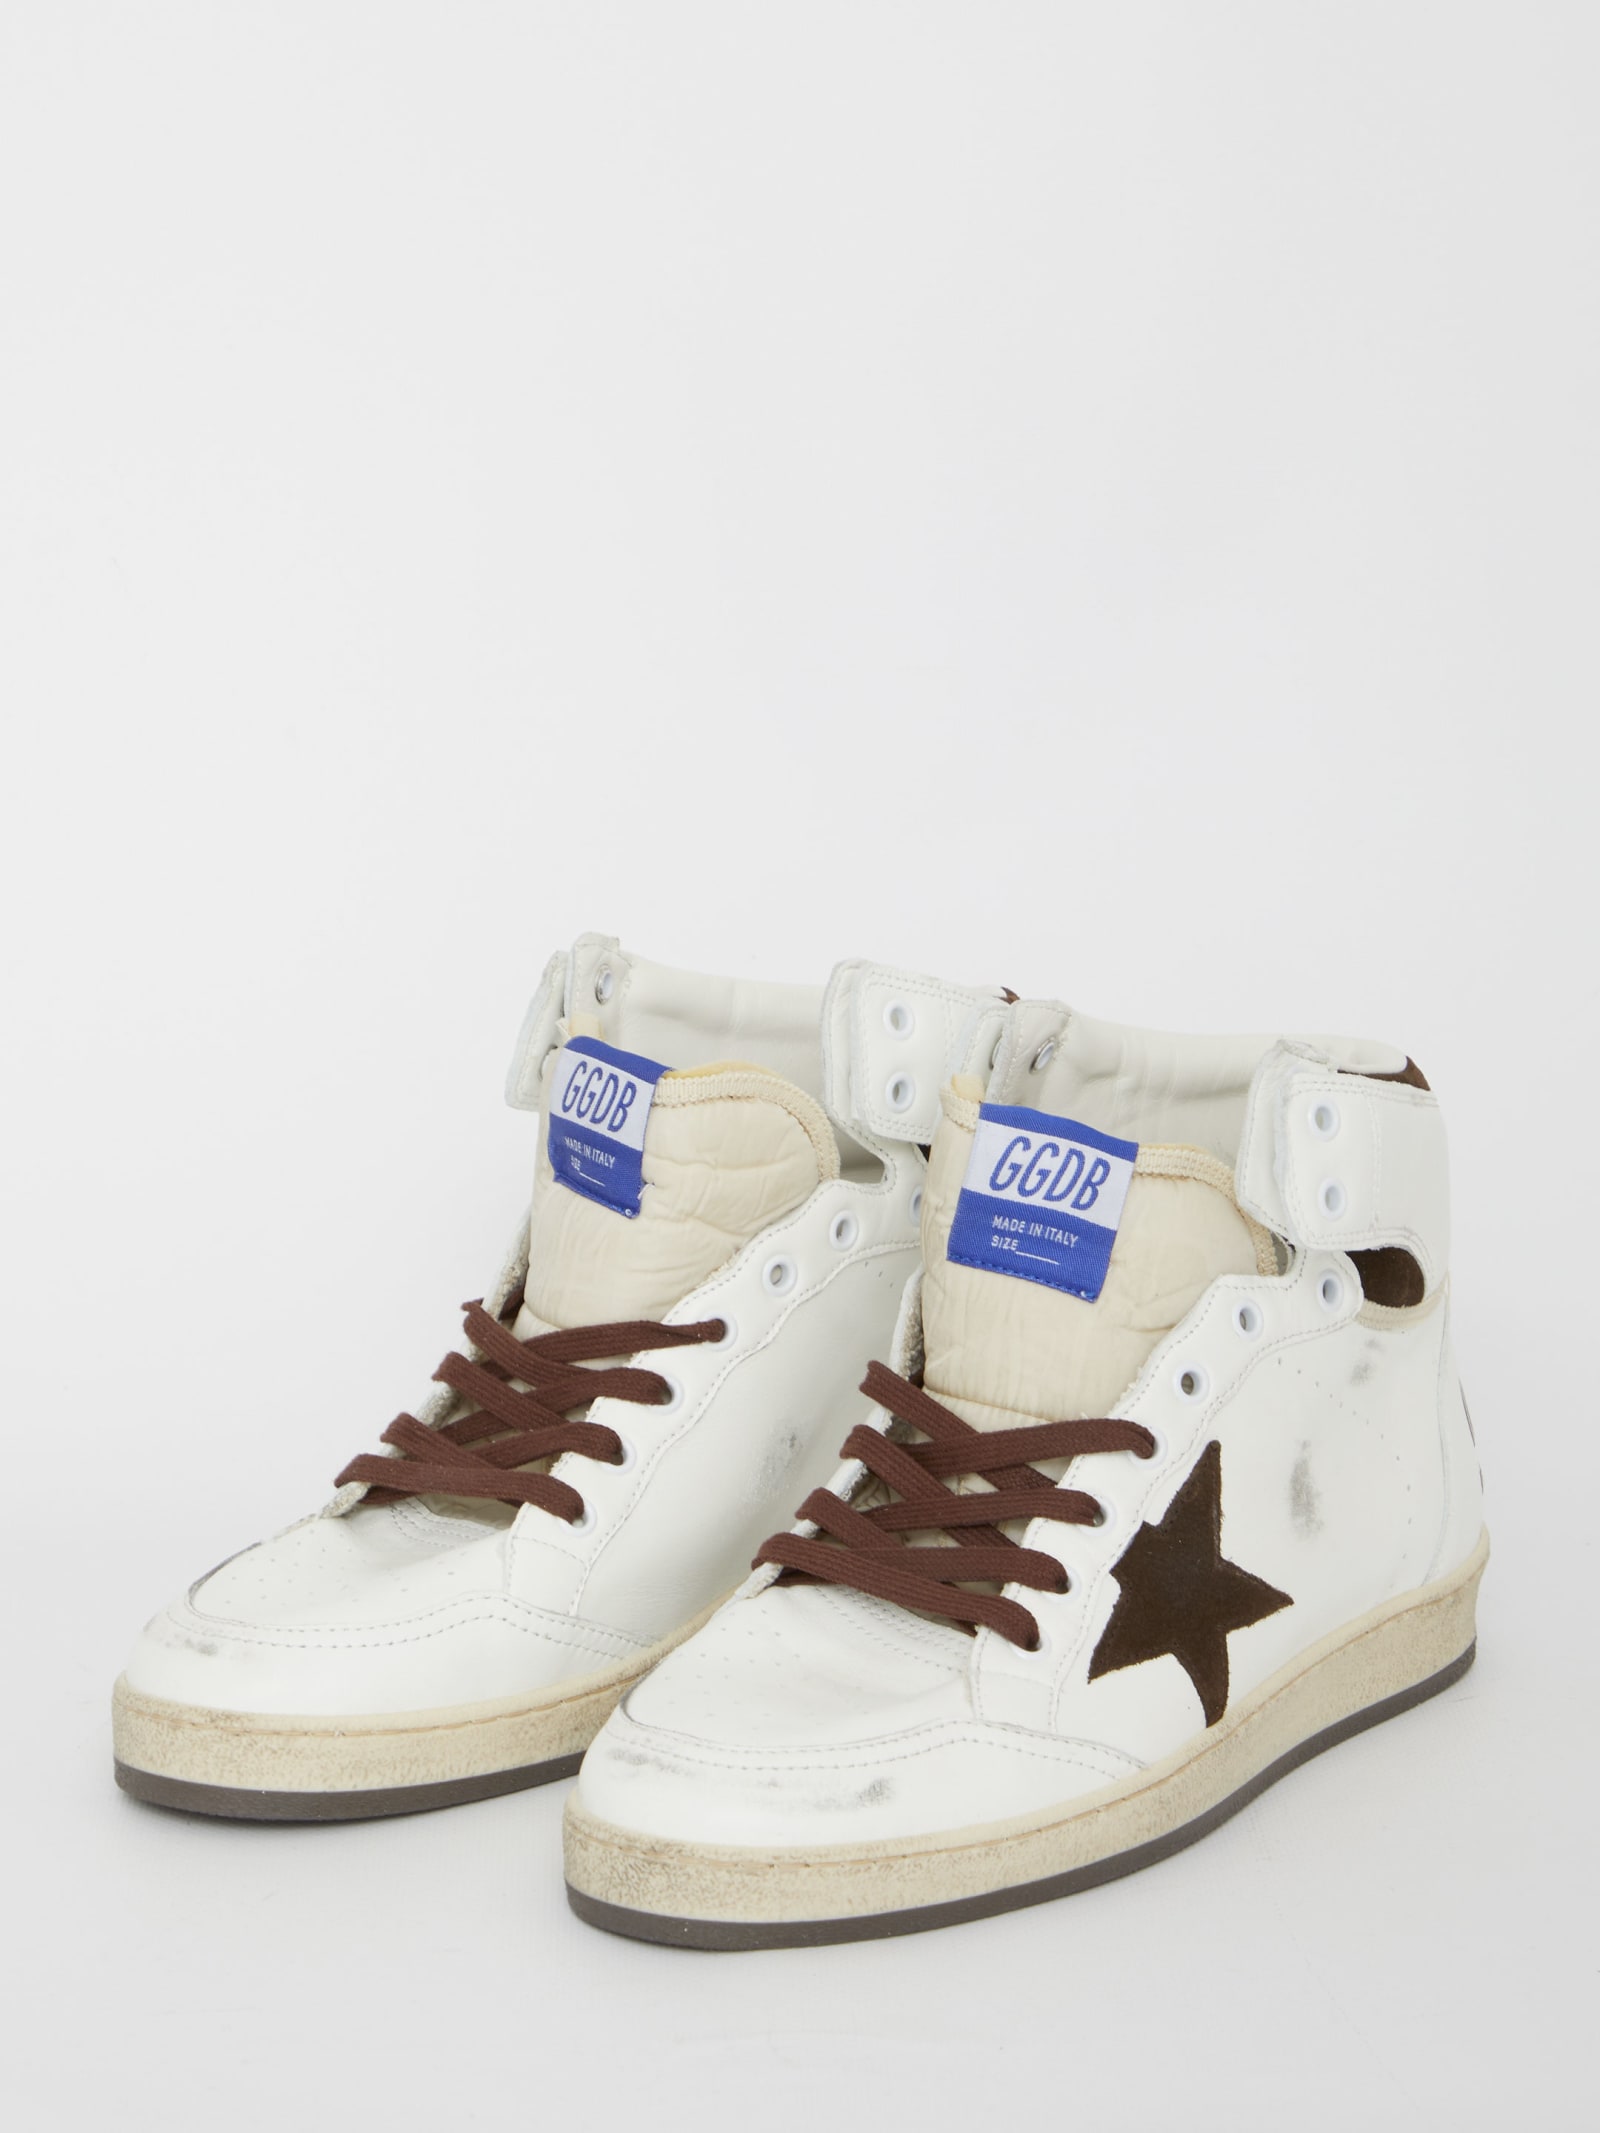 Shop Golden Goose Sky-star Sneakers In White/beige/chocolate Brown